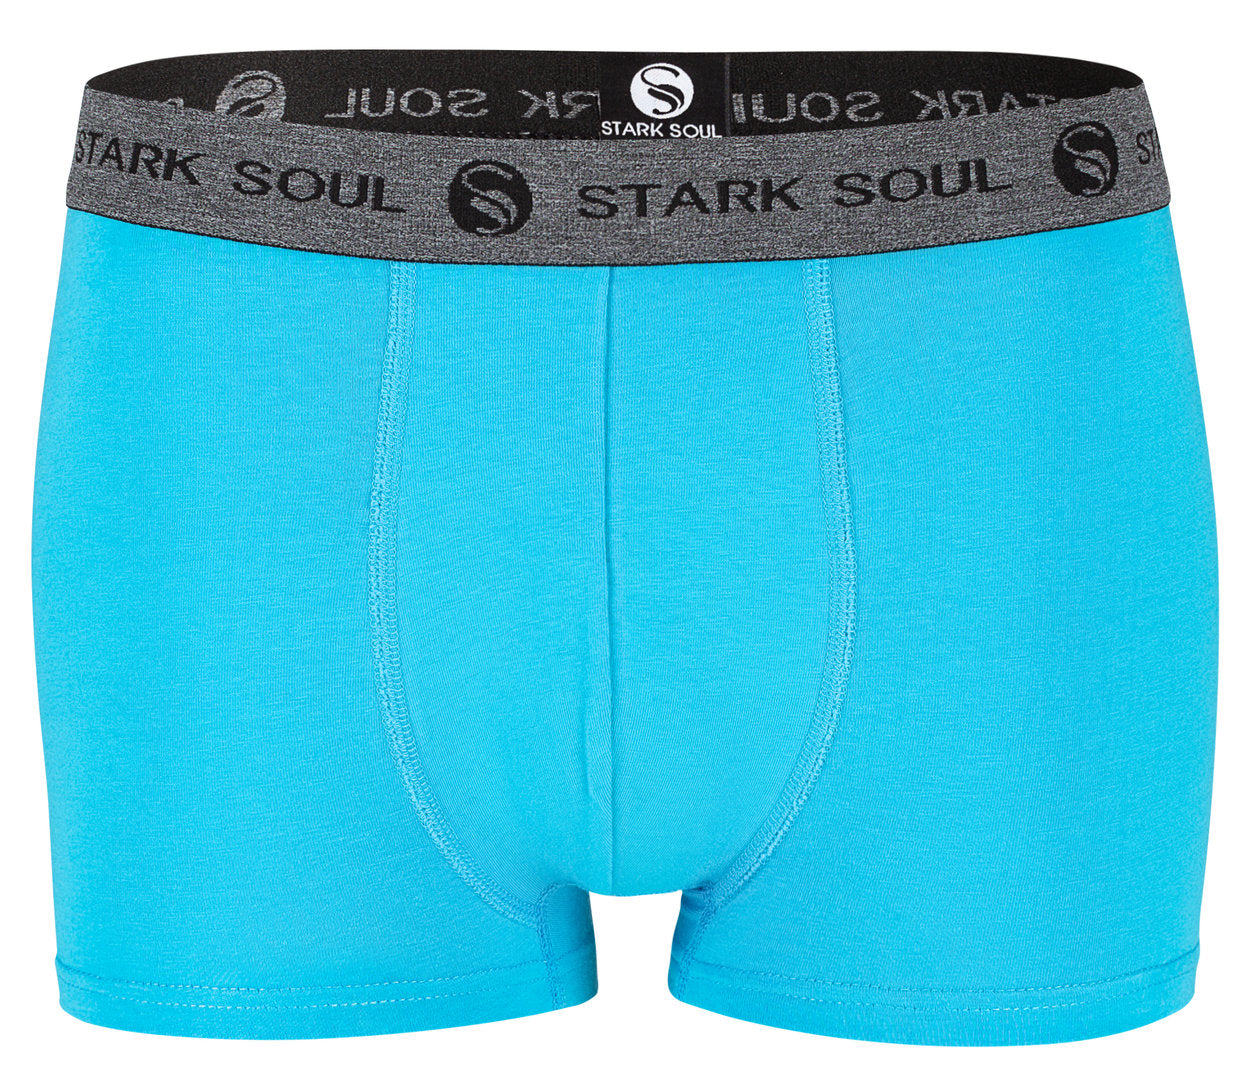 Stark Soul Boxershorts - 95% Baumwolle - 6er Pack